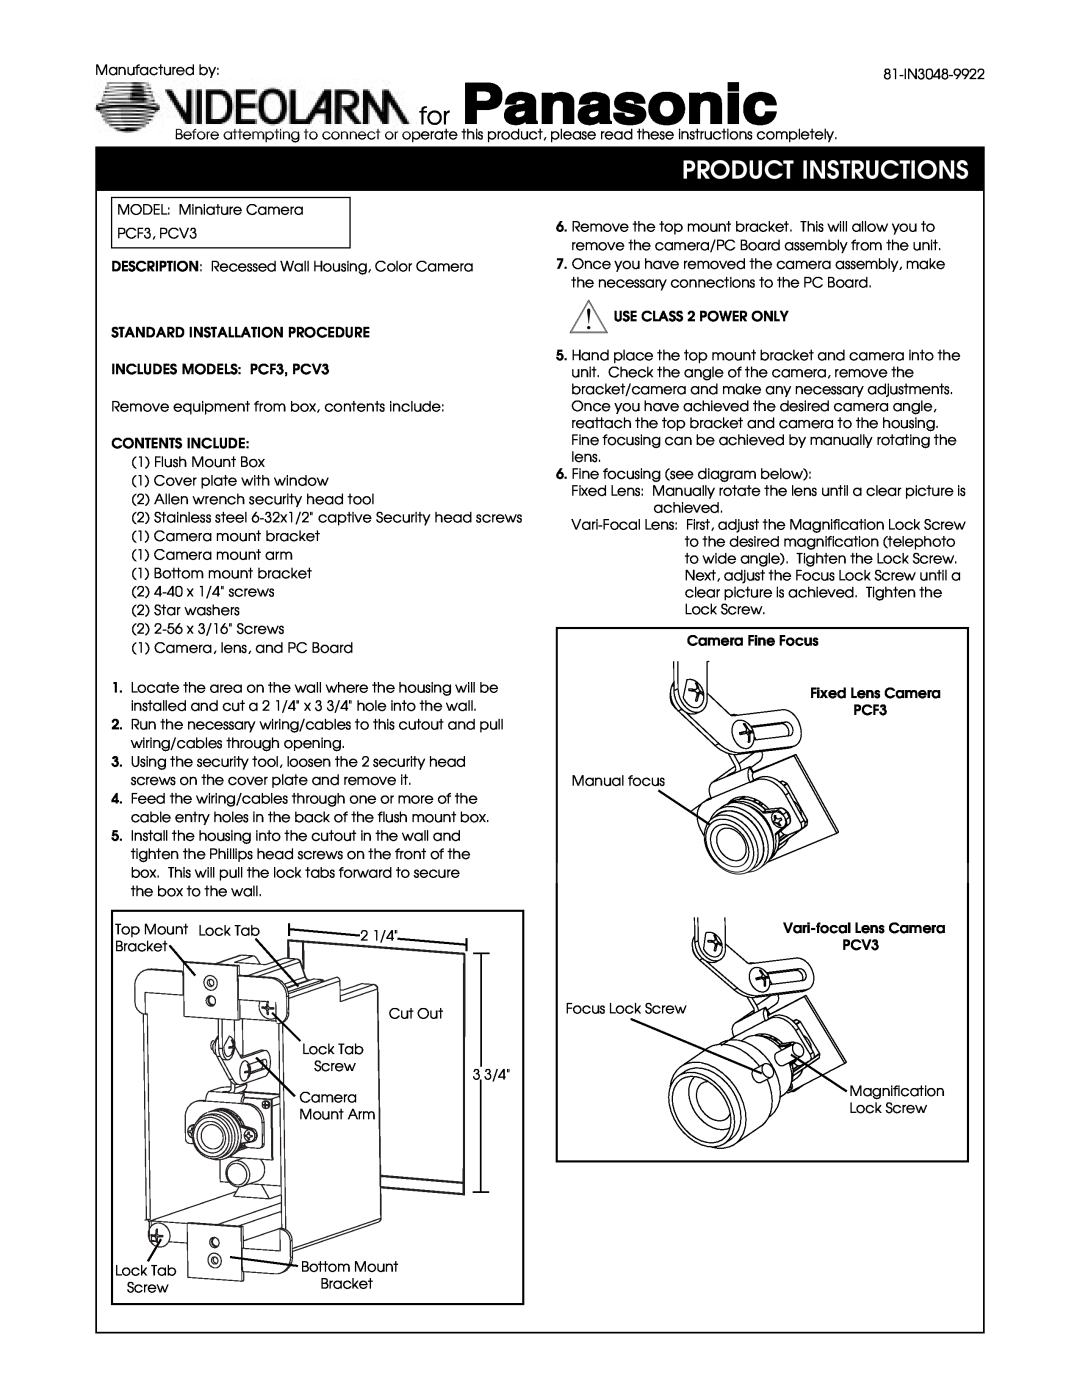 Panasonic PCV3, PCF3 manual Product Instructions 